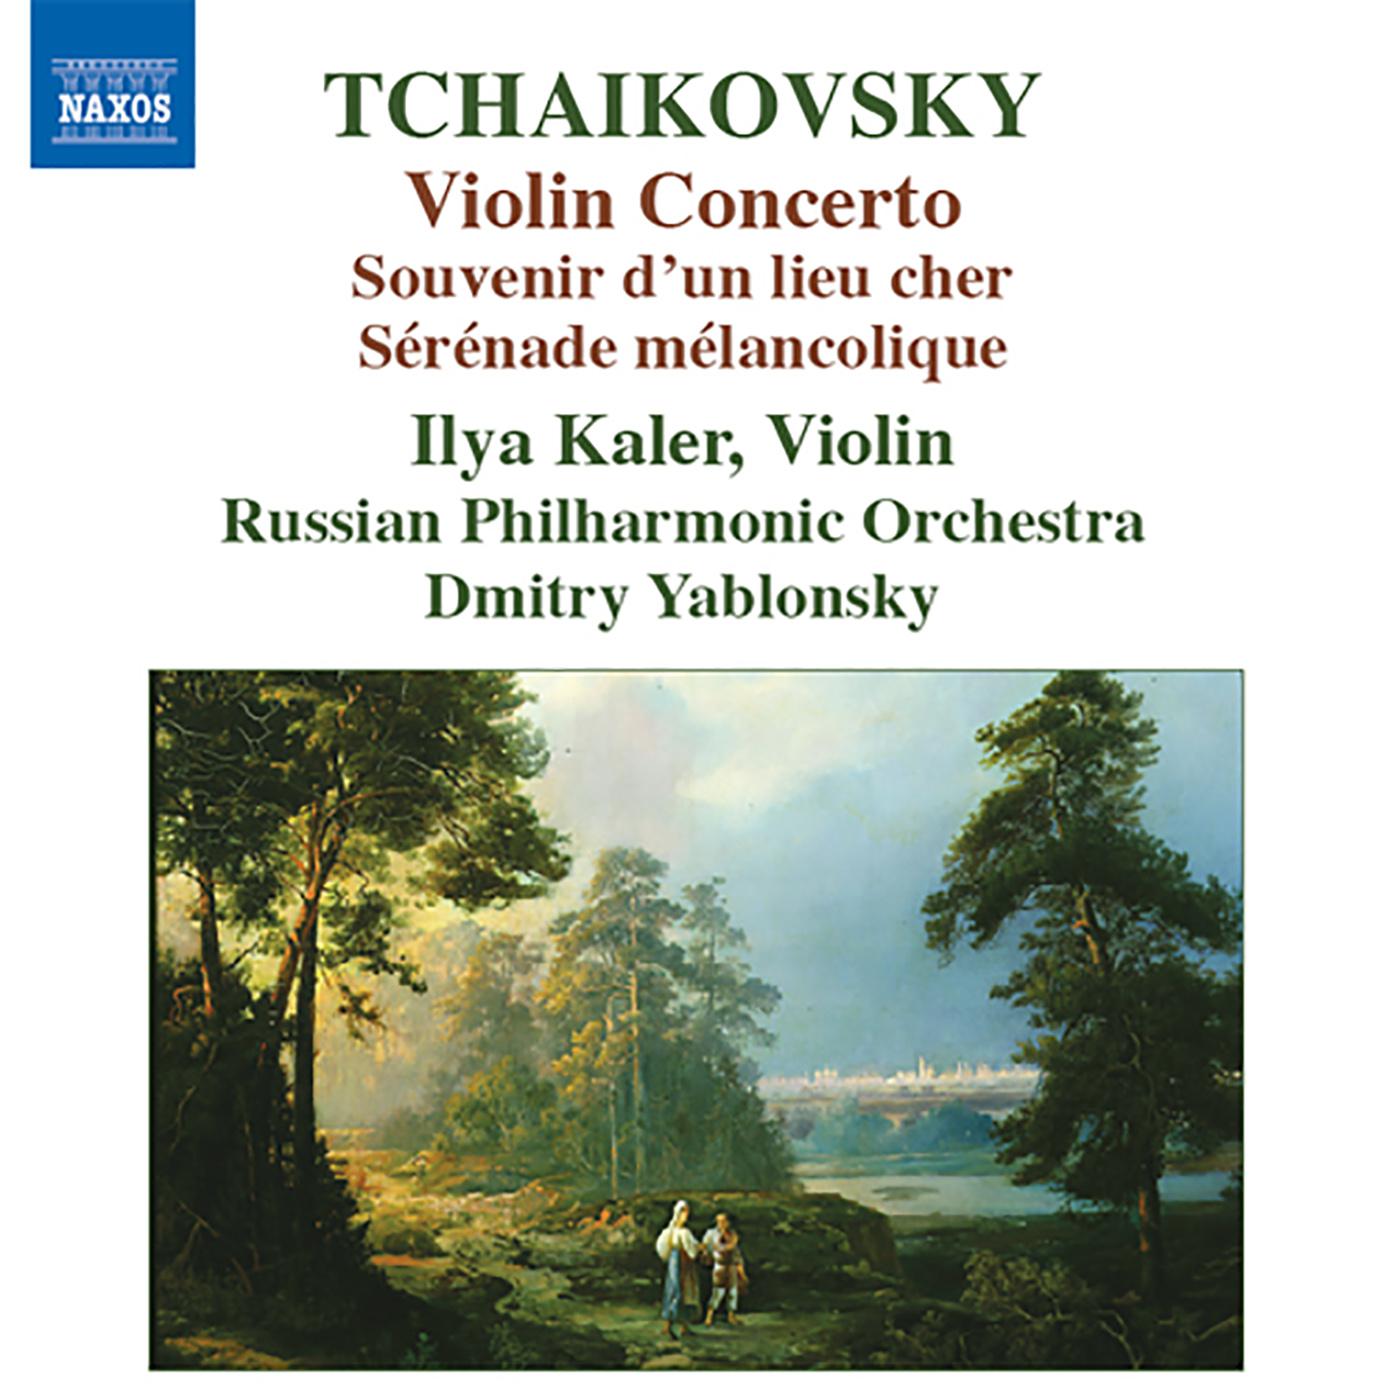 Souvenir d'un lieu cher, Op. 42 (arr. A.K. Glazunov for violin and orchestra): II. Scherzo Souvenir d'un lieu cher, Op. 42 (arr. A.K. Glazunov for violin and orchestra)